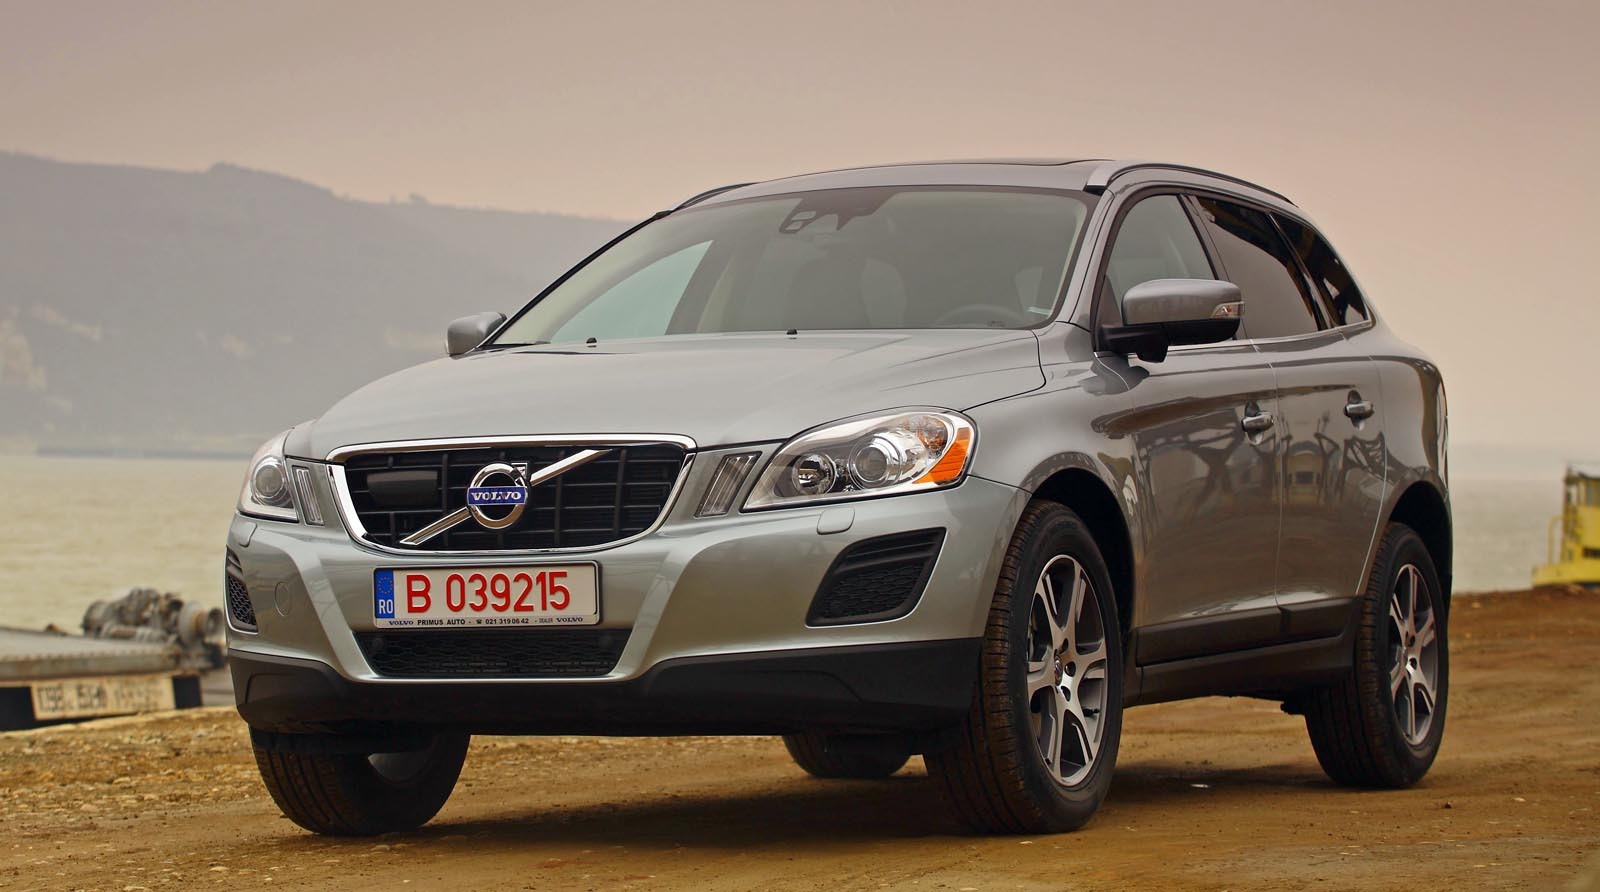 Volvo XC60 model 2011 nu vine cu modificari estetice, avand acelasi stil dinamic si elegant